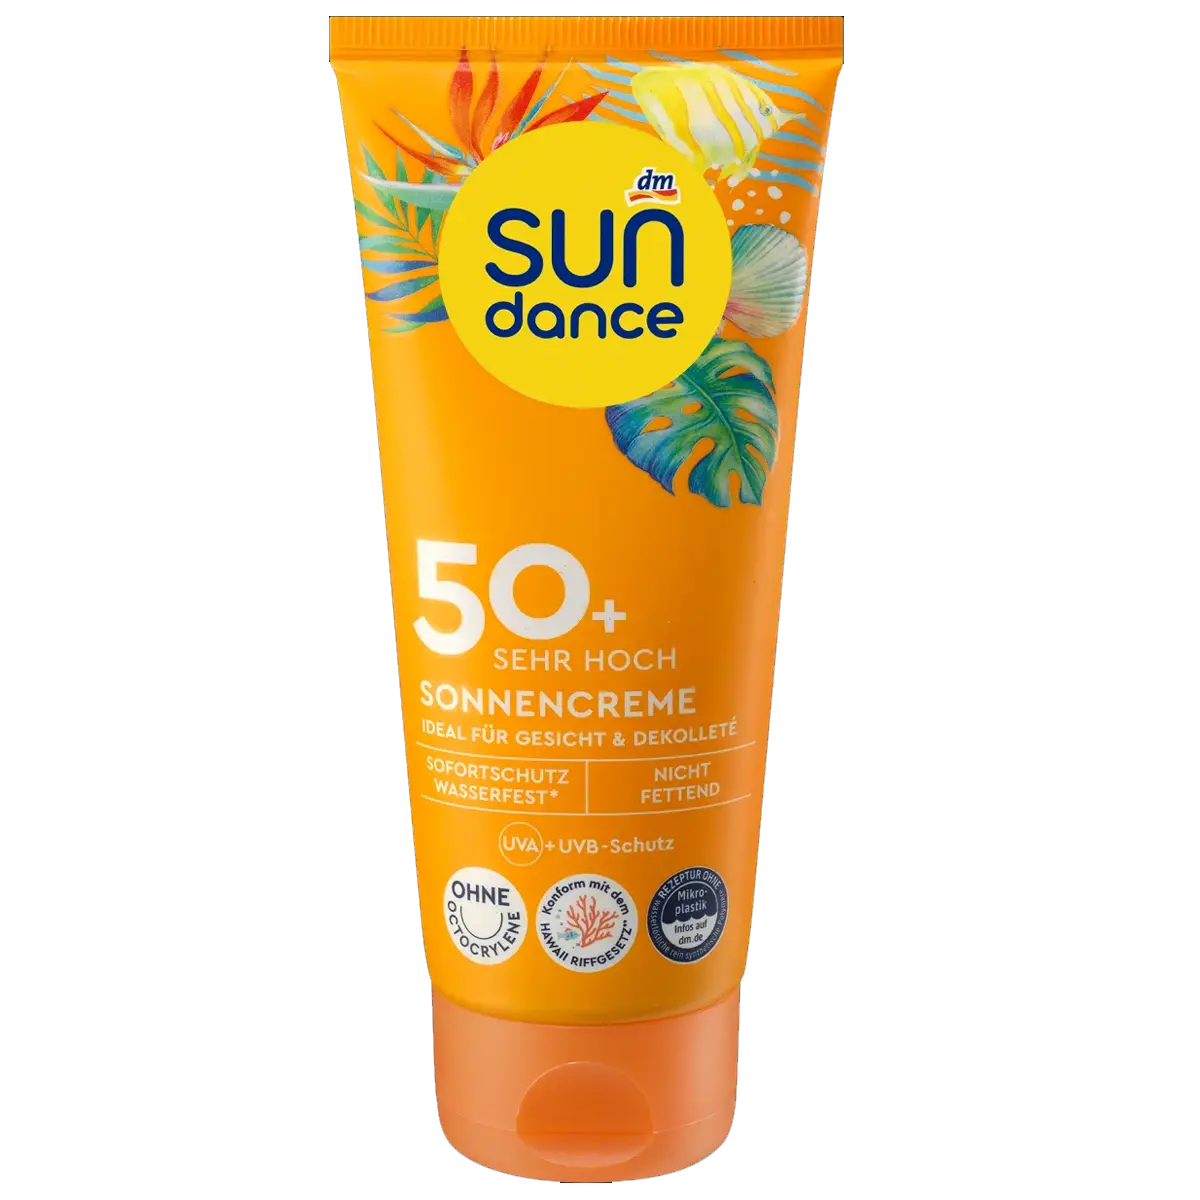 Sunscreen SPF 50+ Very High Protection, 100 ml